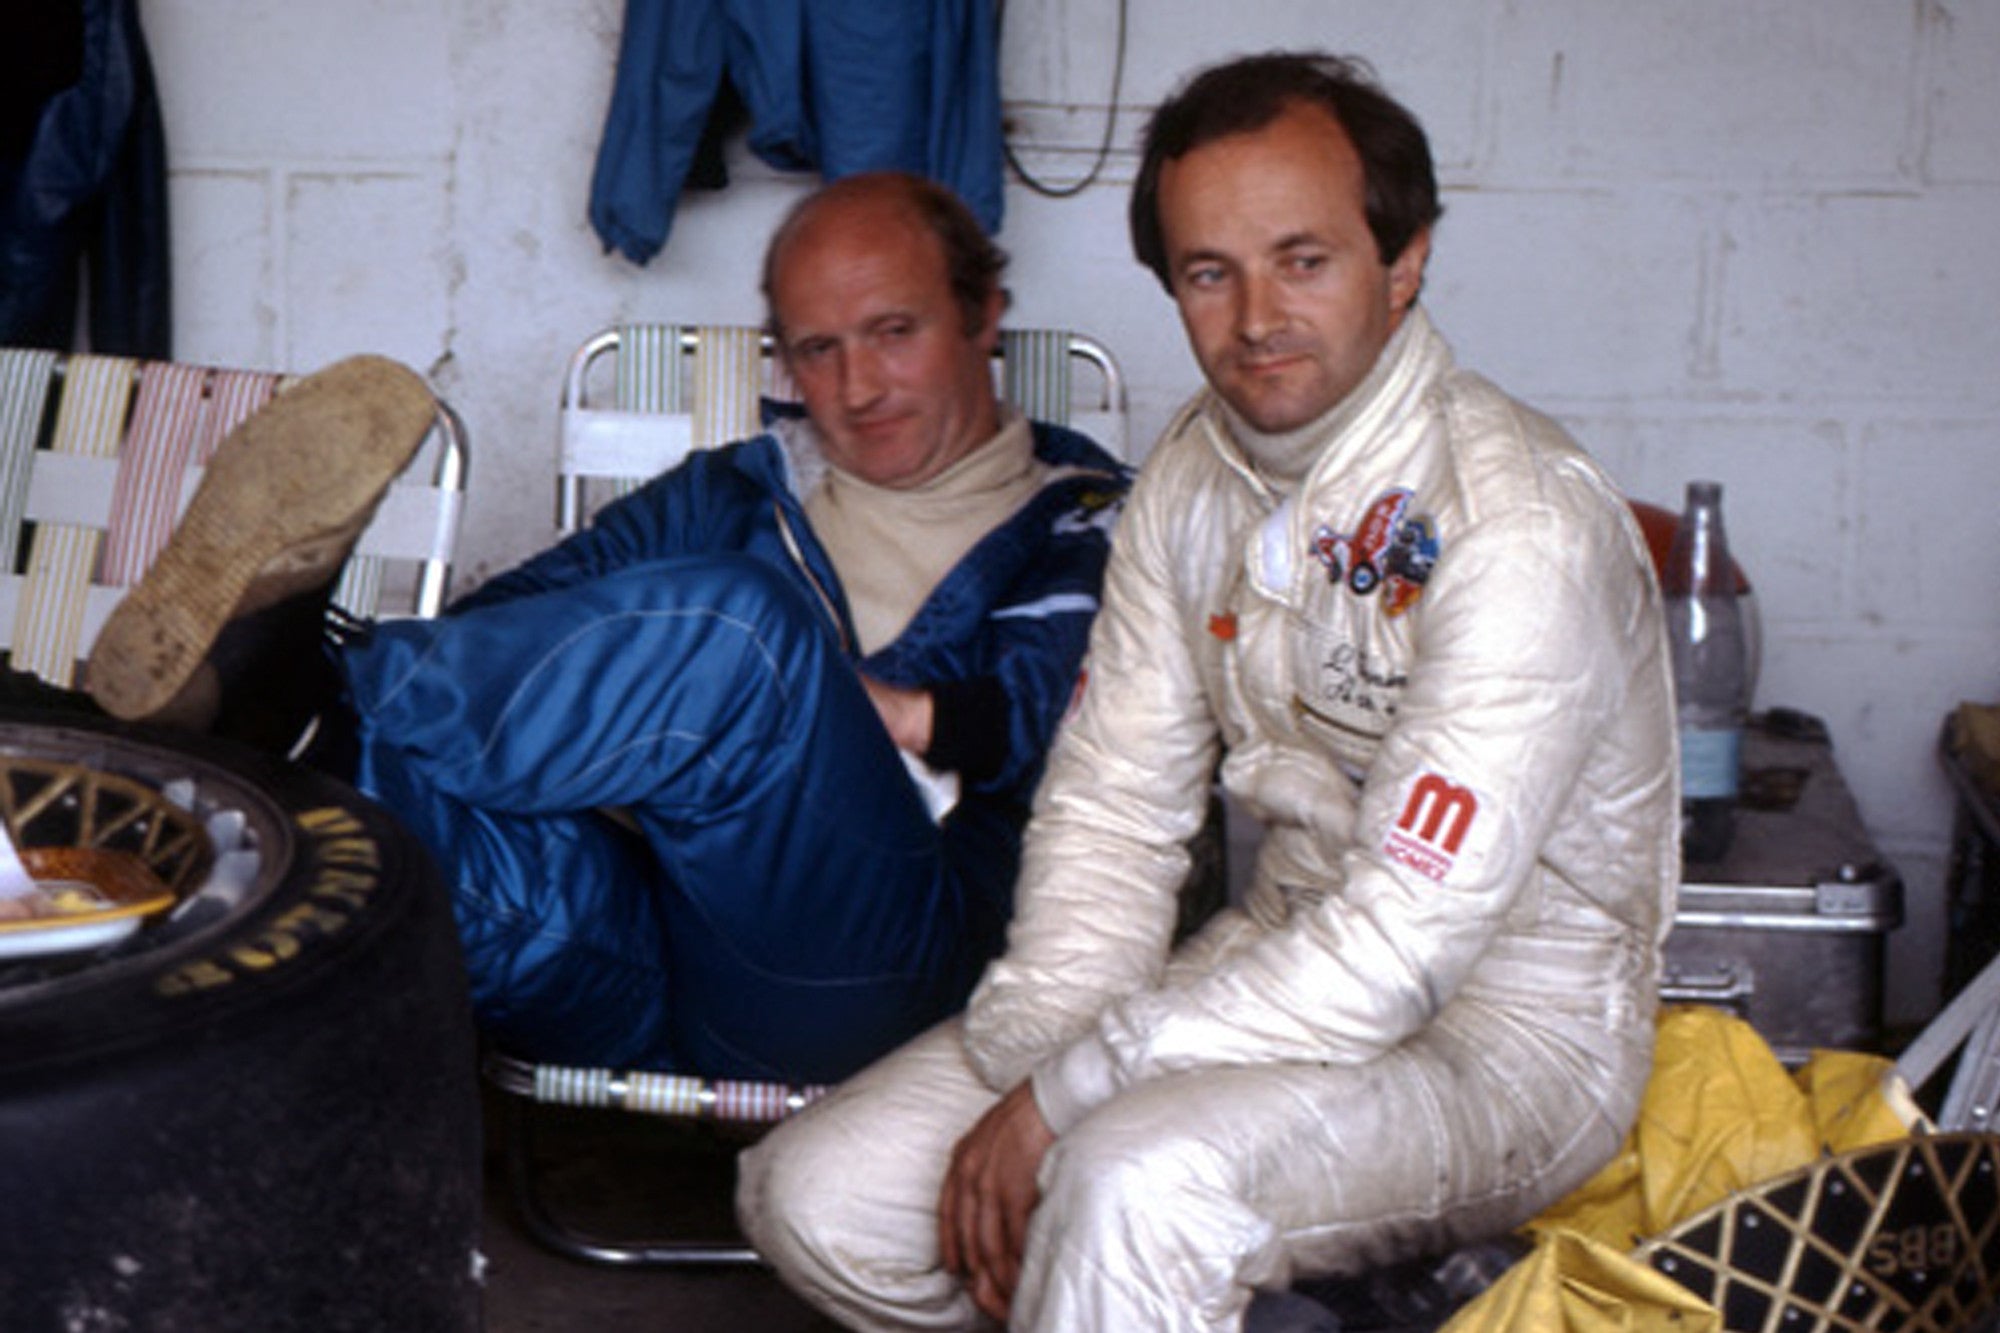 François Servanin and Laurent Ferrier racing at Le Mans